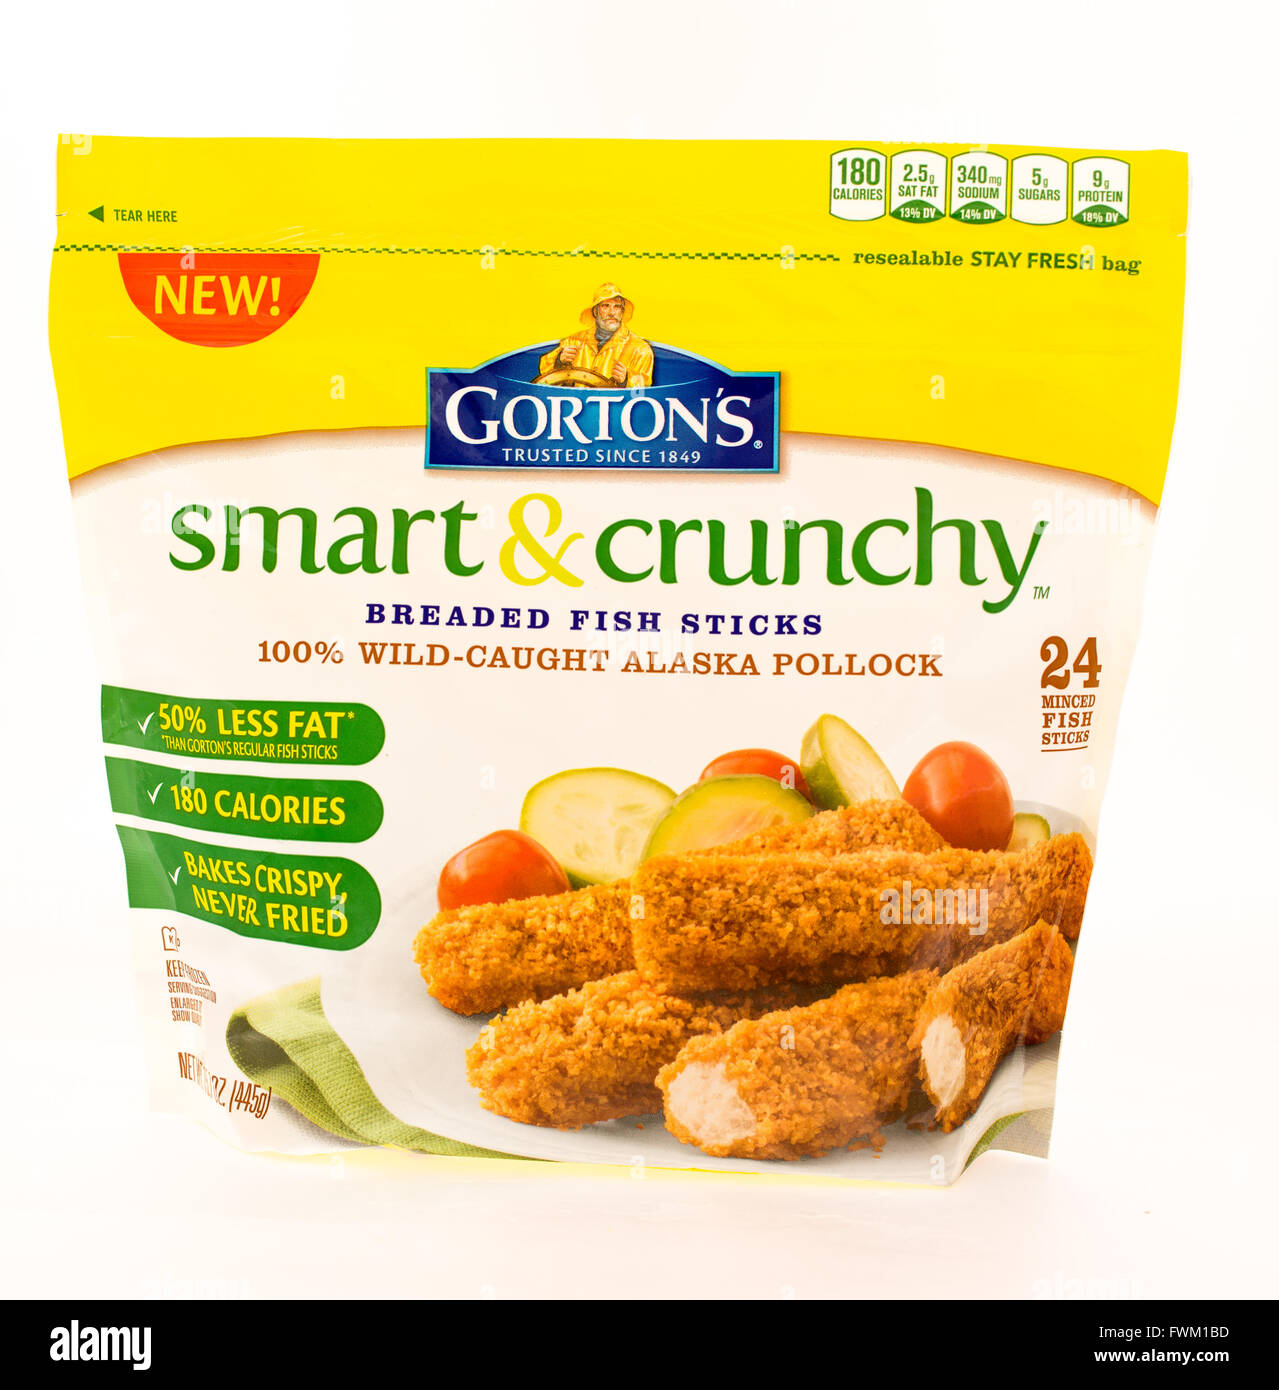 Winneconne, WI - 29 August 2015: Bag of Gorton's smart & crunchy fish sticks Stock Photo